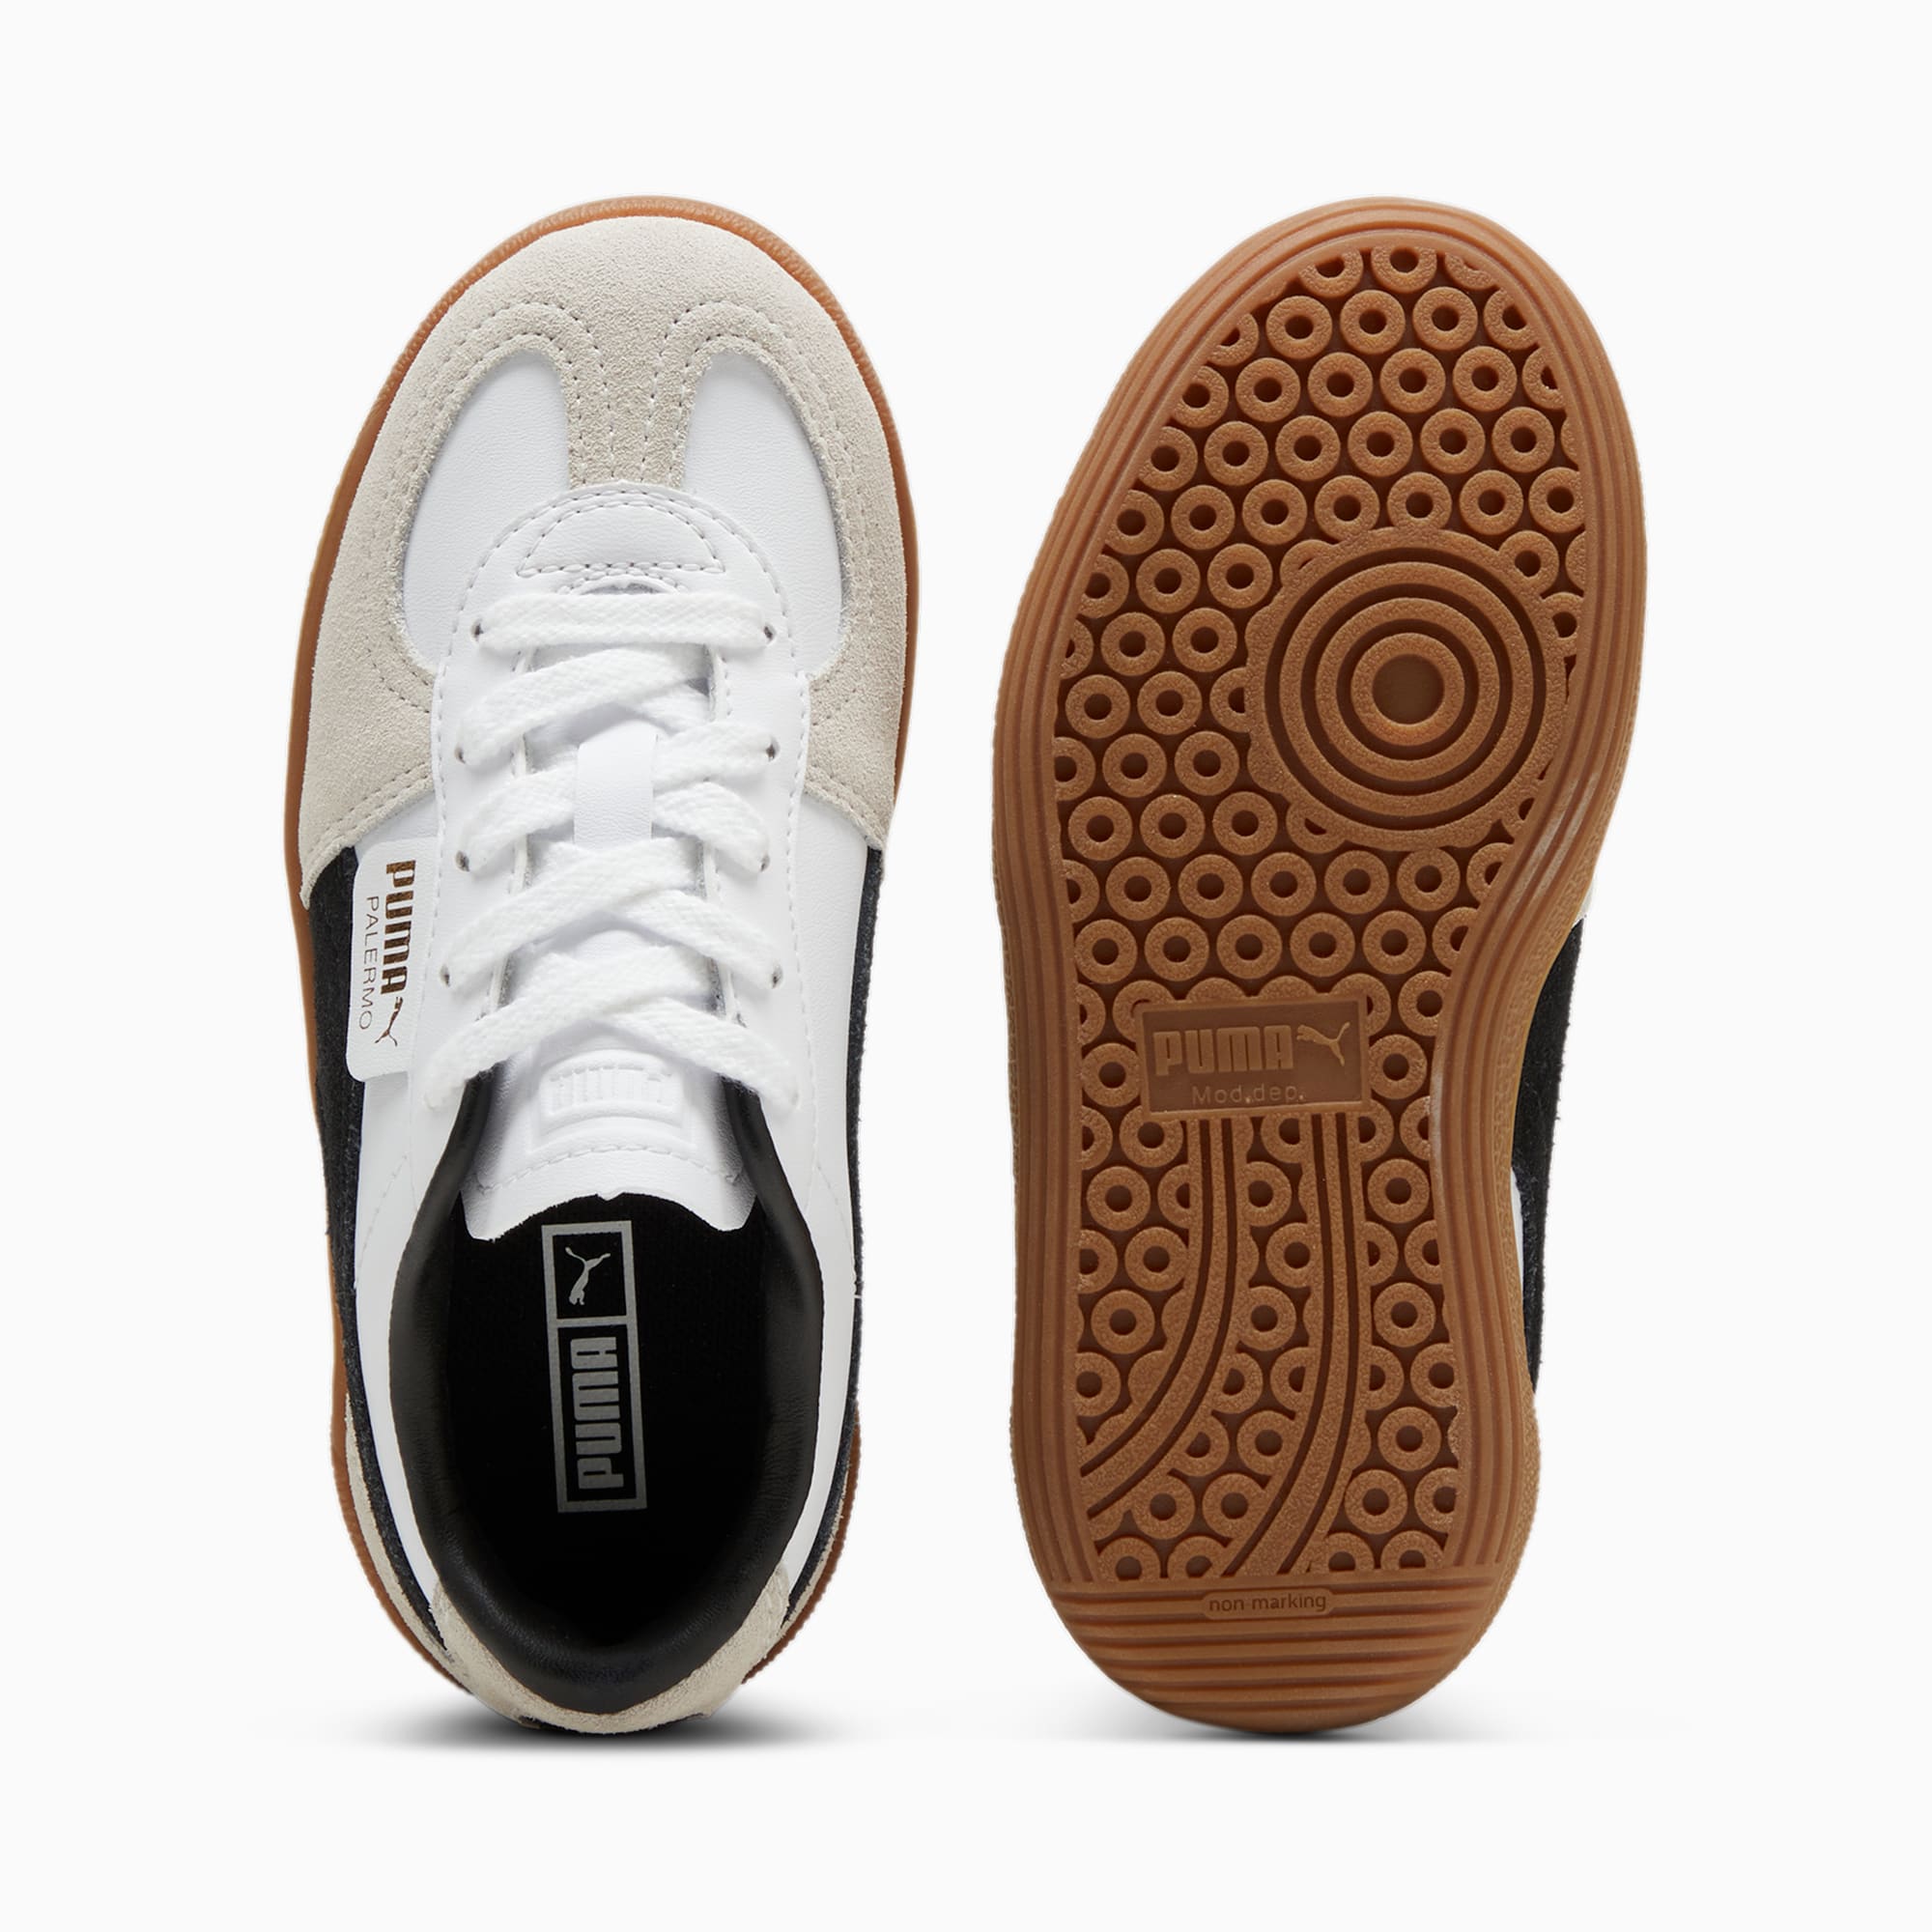 PUMA Palermo Lth Sneakers Kinder Schuhe, Weiß/Grau, Größe: 27.5, Schuhe